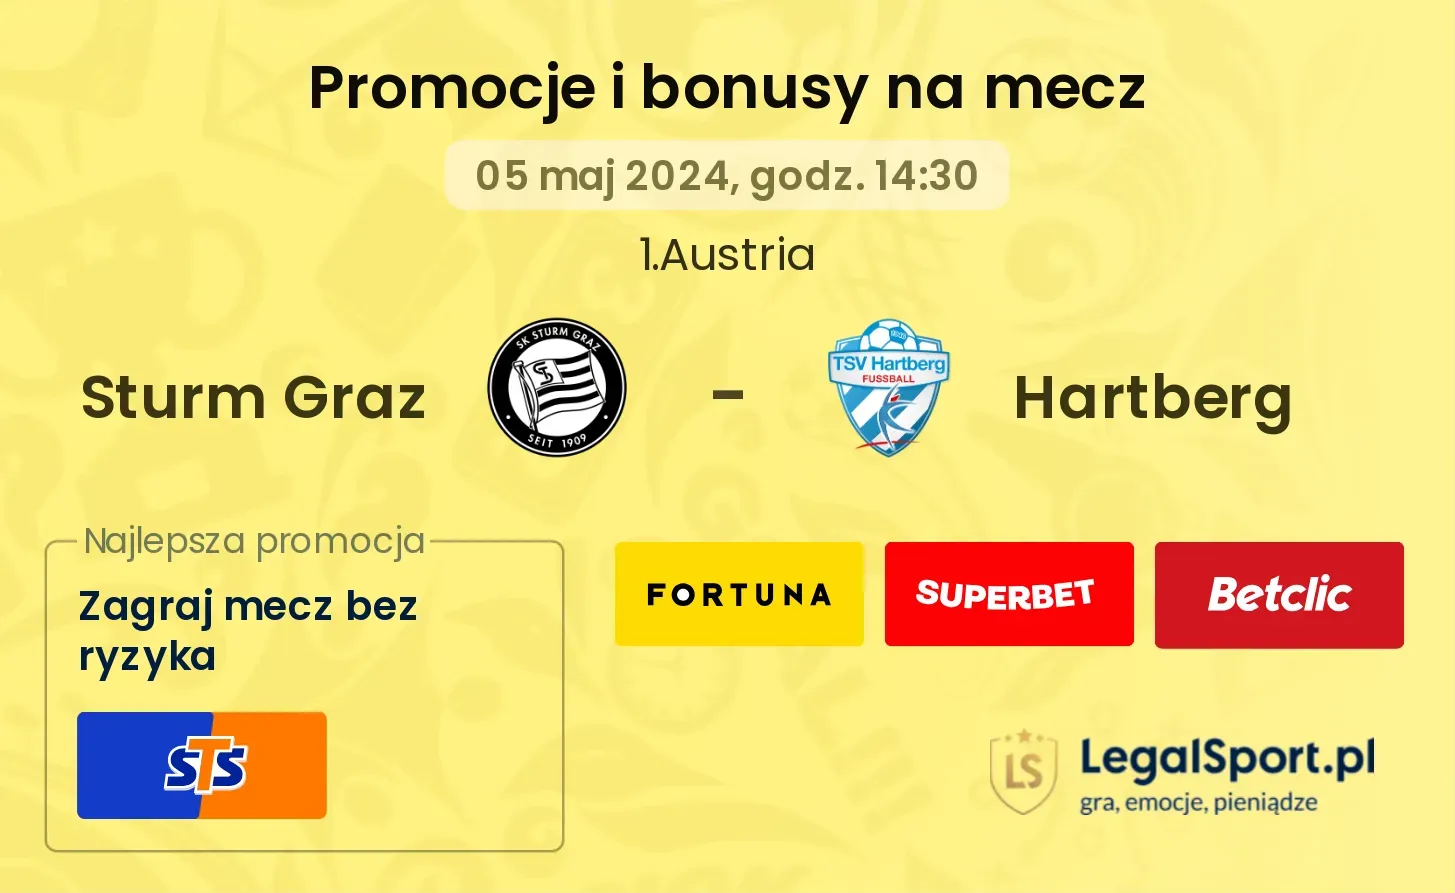 Sturm Graz - Hartberg promocje bonusy na mecz